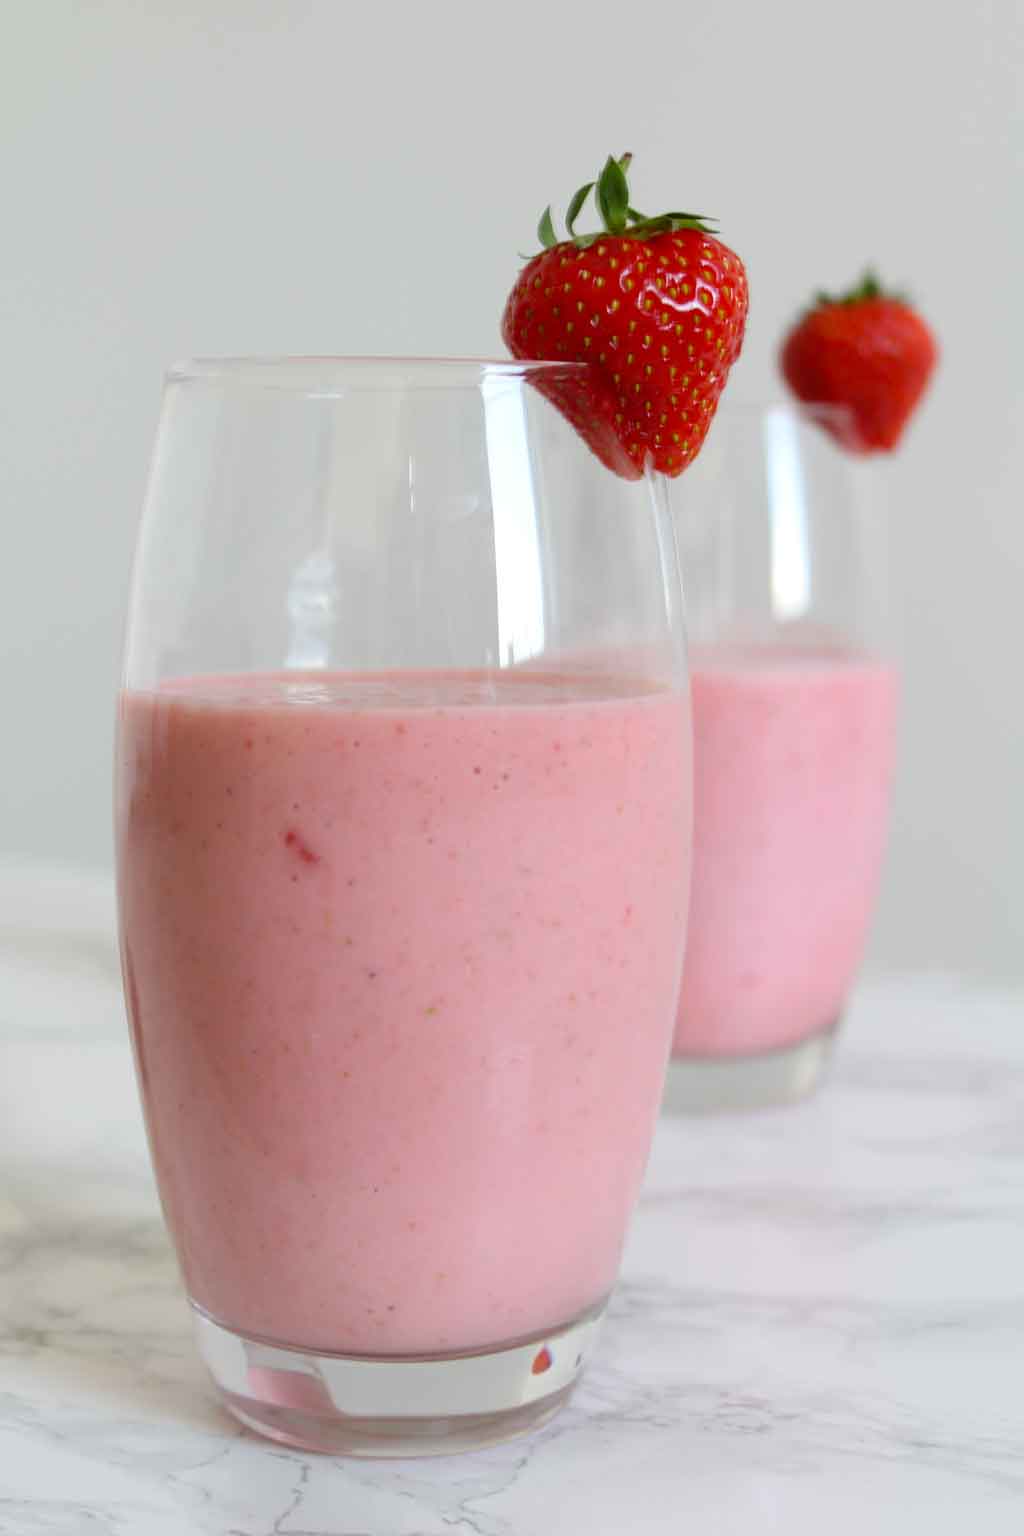 Two vegan strawberry milkshakes in glasses